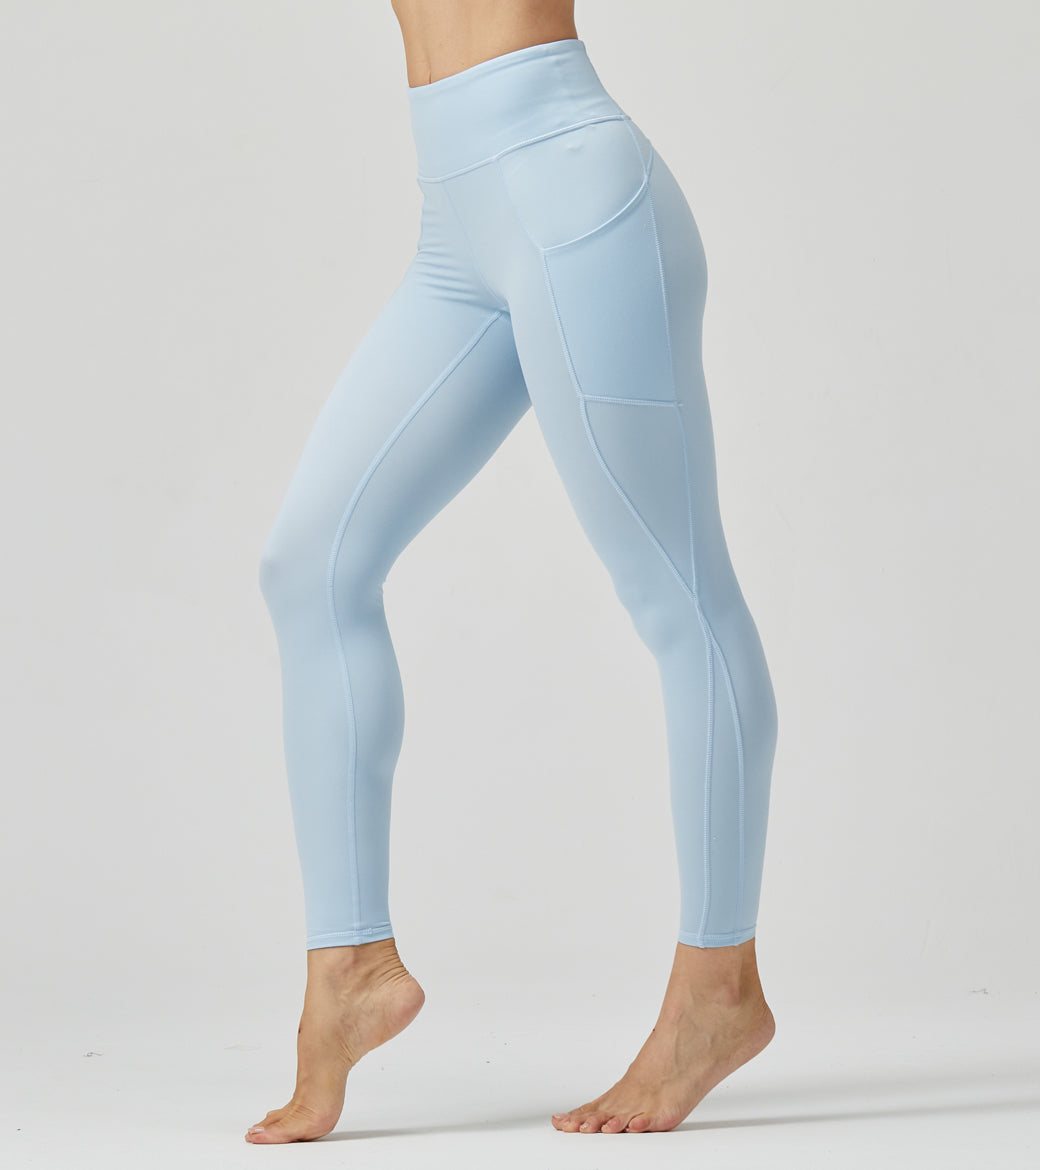 LOVESOFT Women's blue Lycra gym running hip-lifting yoga leggingsyoga pants